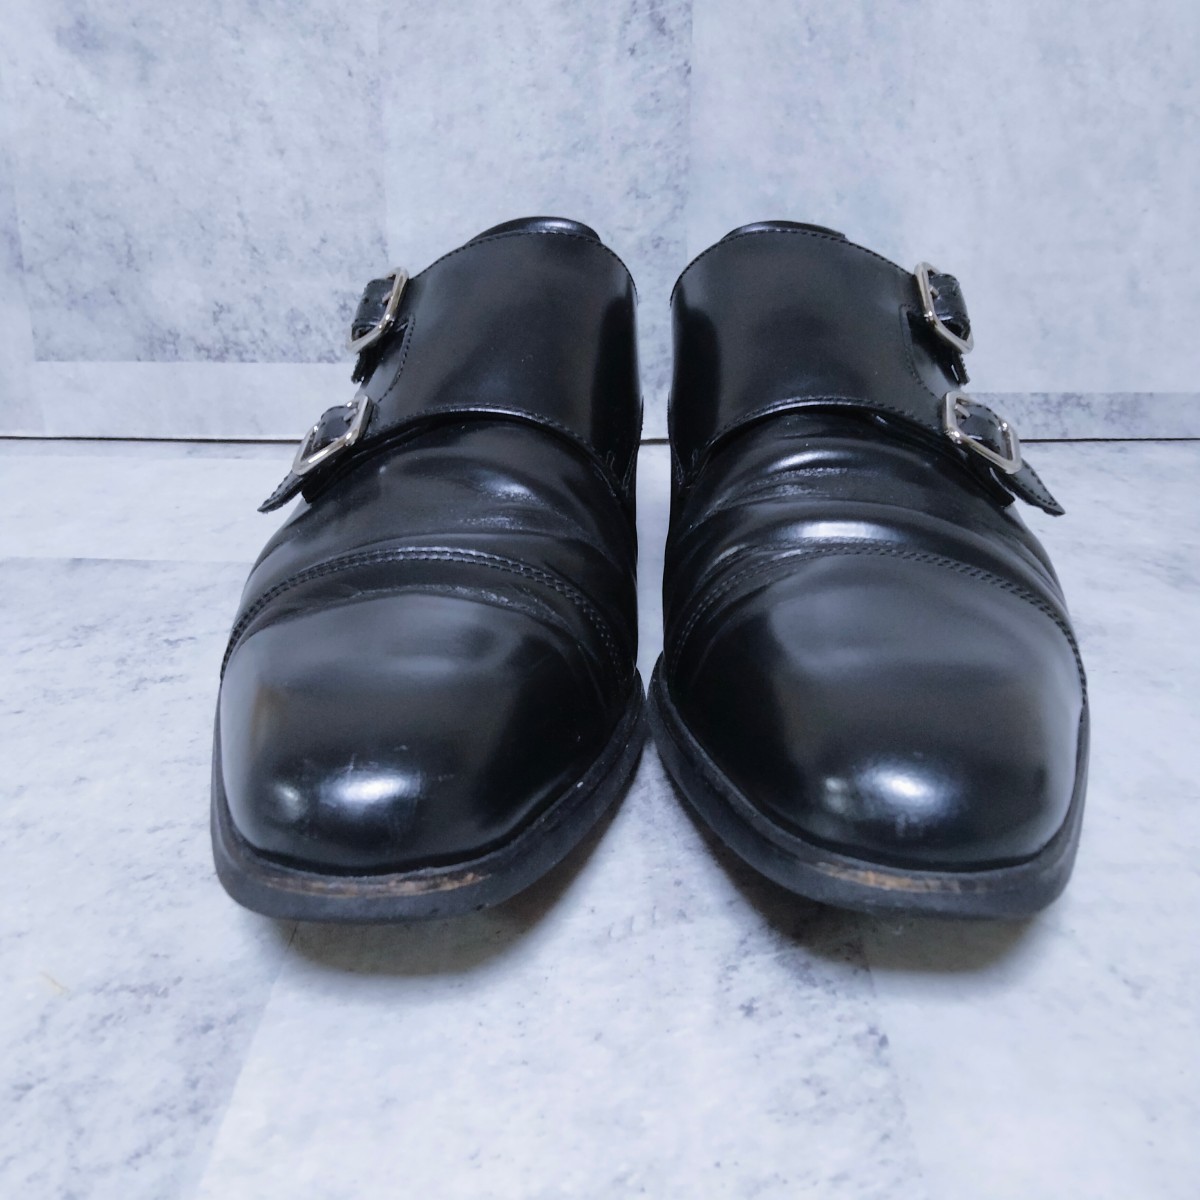 REGAL リーガル V196 ■ モンクストラップ ビジネスシューズ 25.0cm ■ ブラック 黒 メンズ 革靴 レザー 本革 _画像2